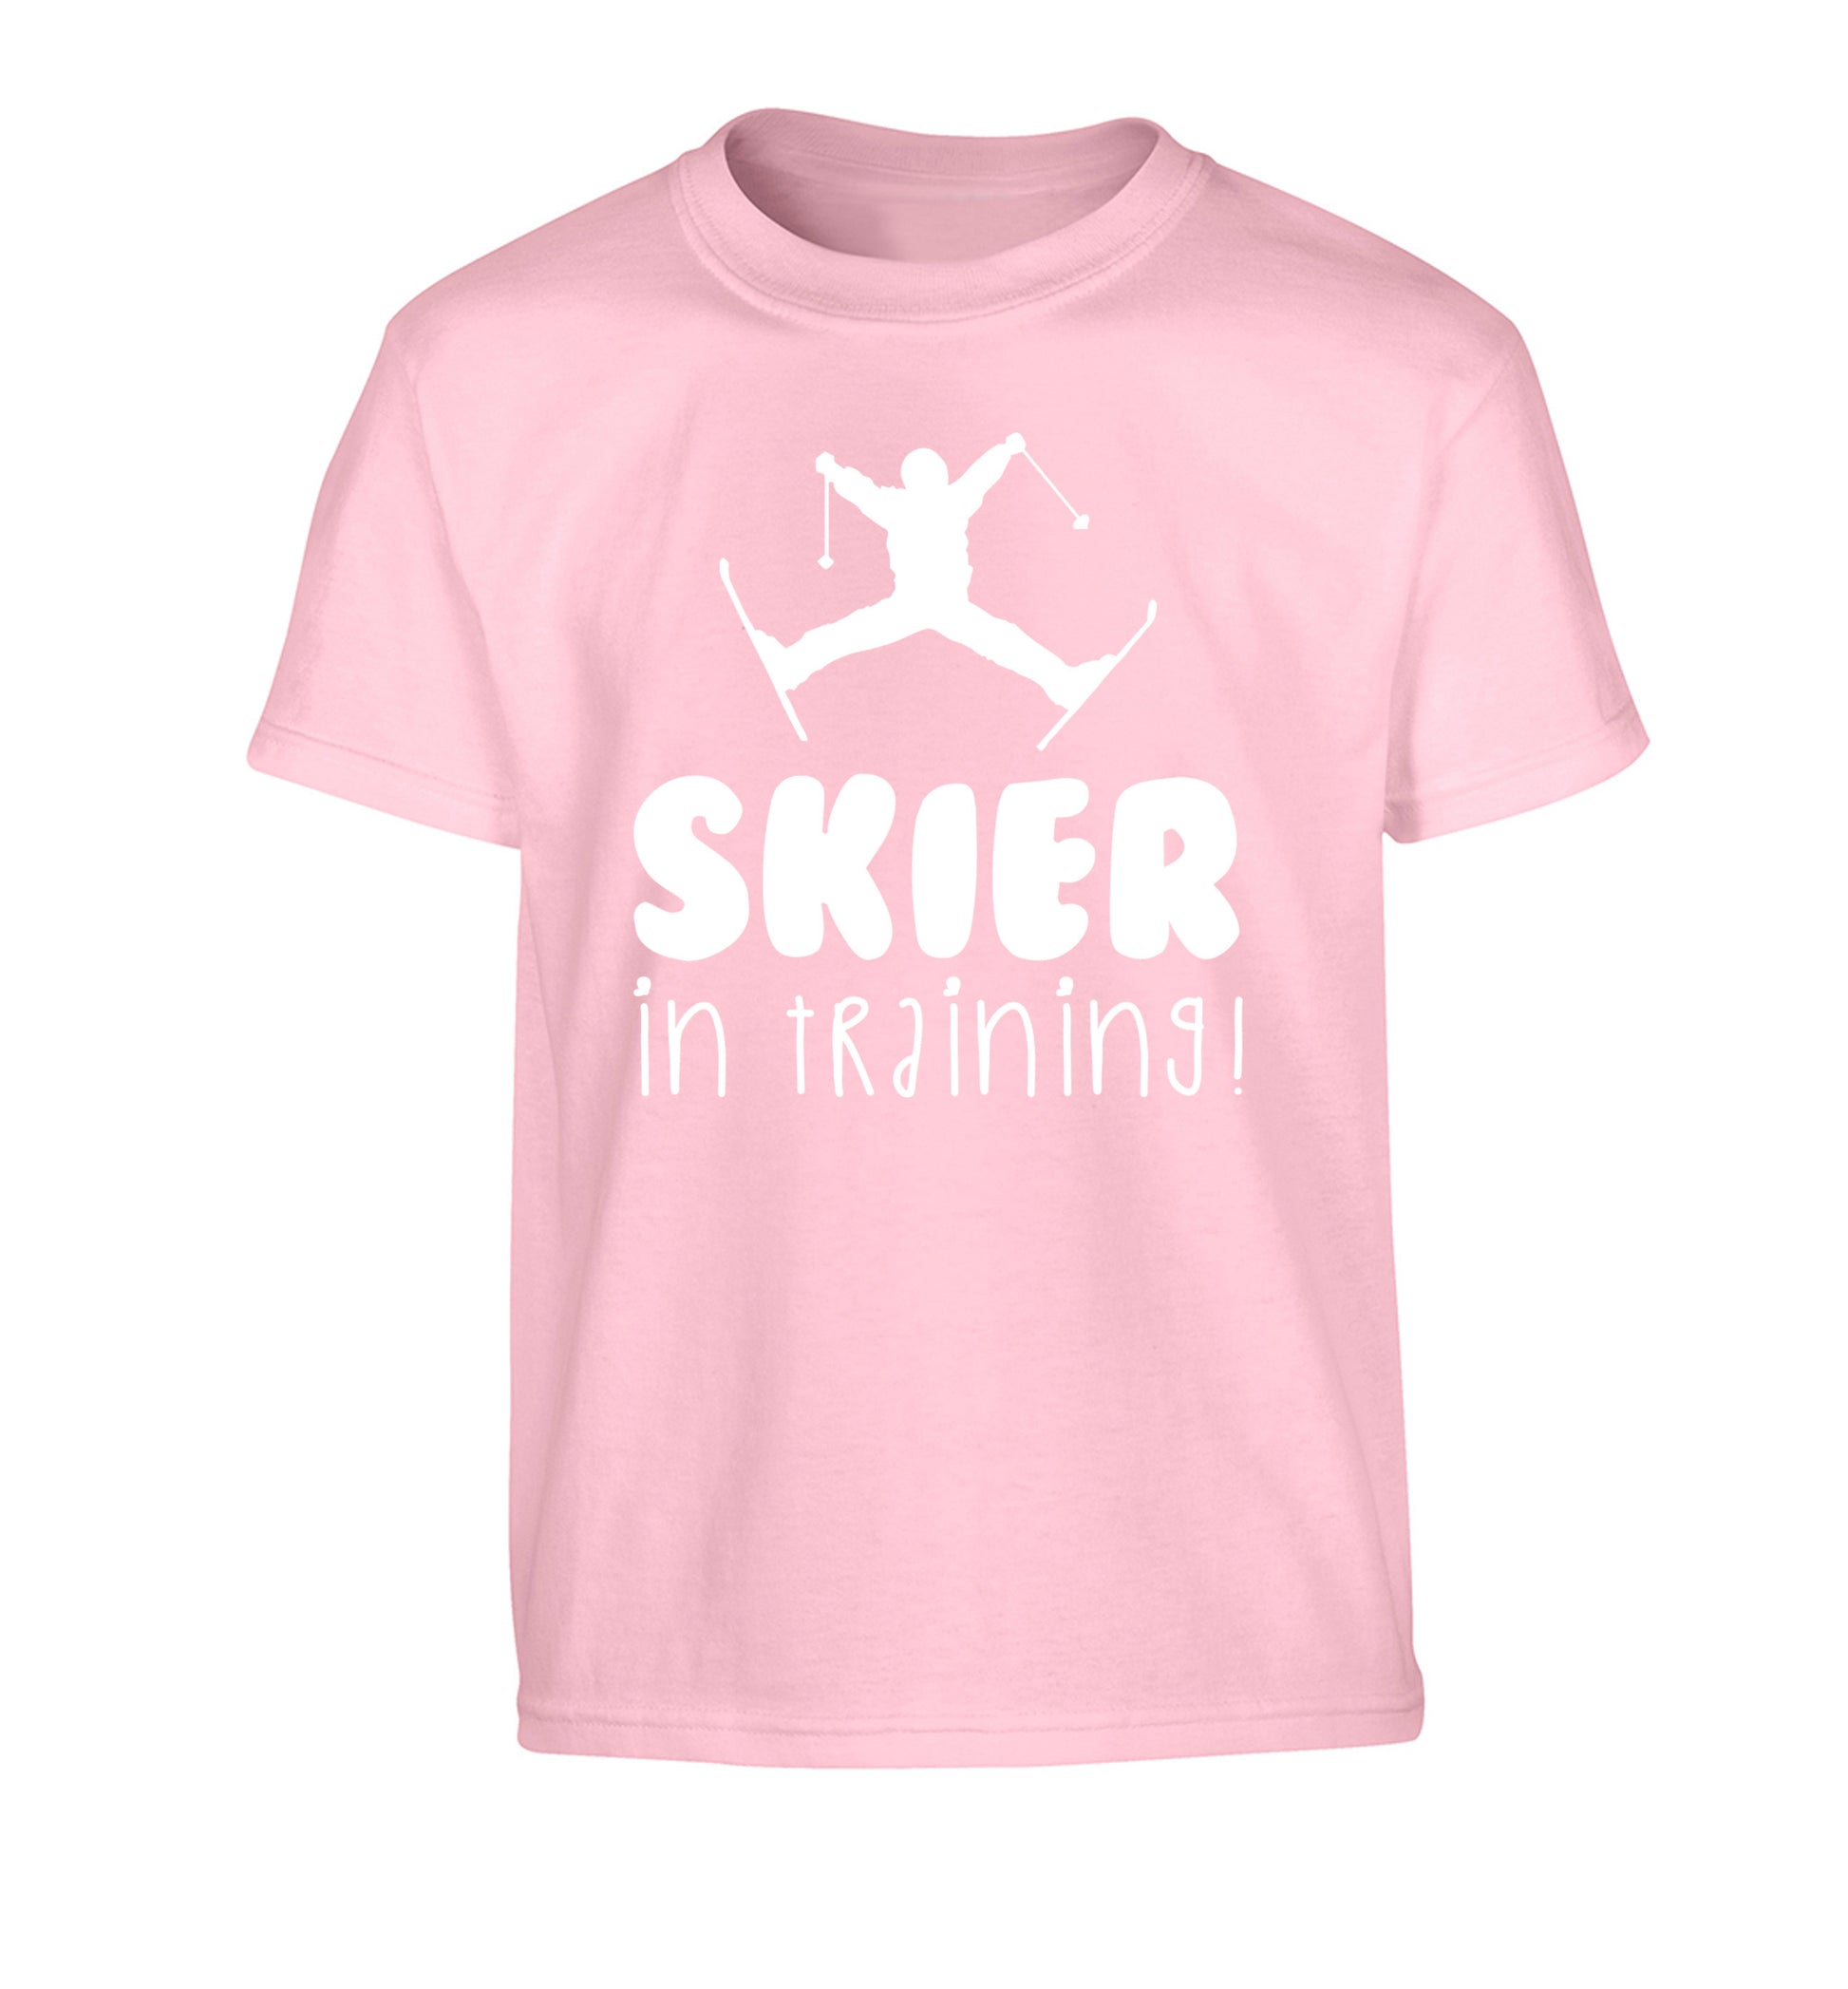 Skier in training Children's light pink Tshirt 12-14 Years